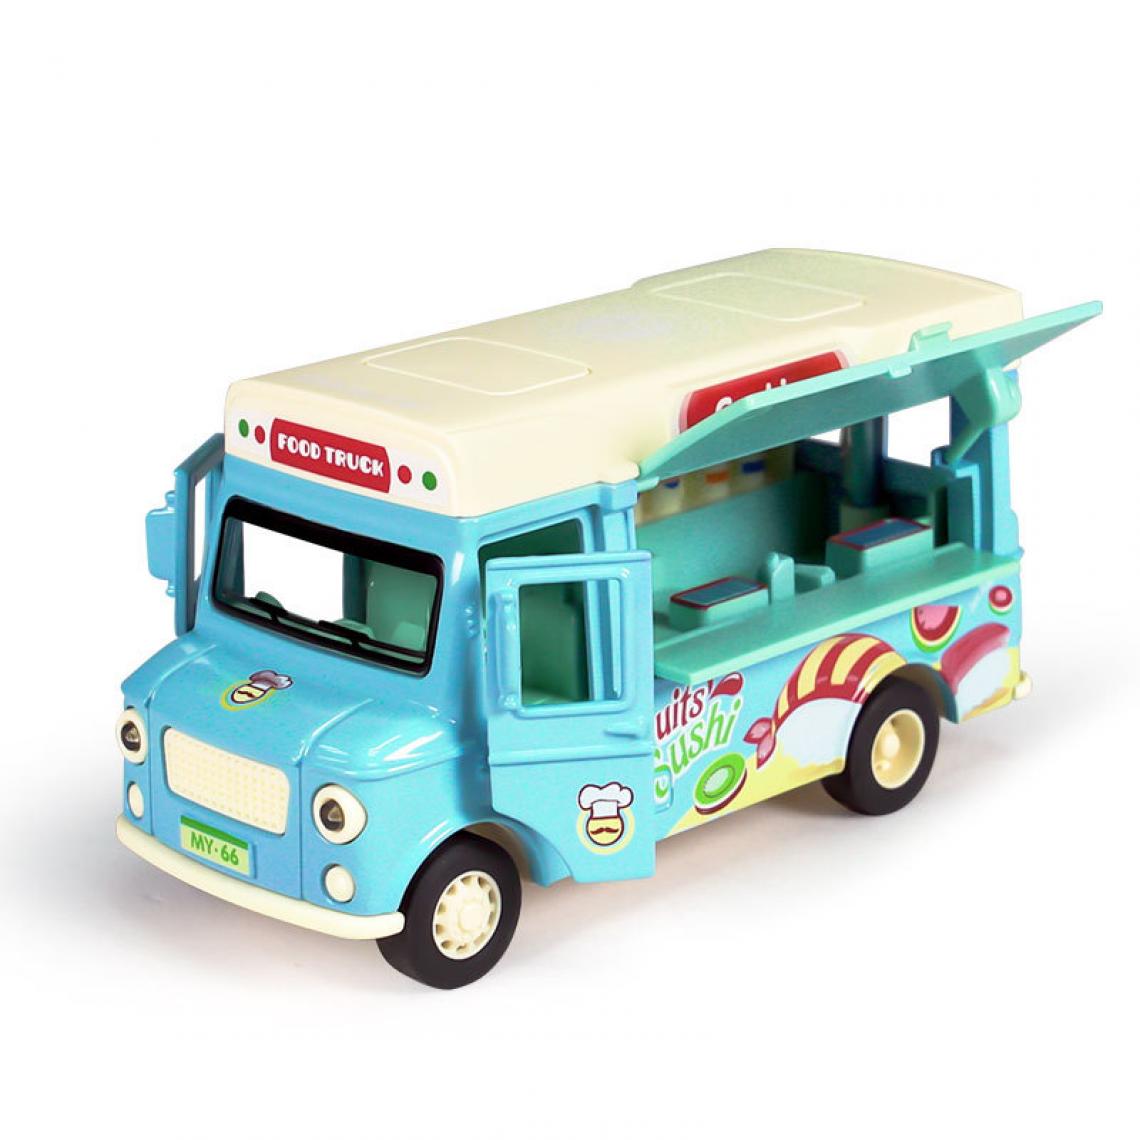 Universal - 1: 36 Voiture jouet Food Truck Mini Food Fast Food Pizza Burger Sushi Jouet Homme Métal Voiture Miniature(Bleu) - Voitures